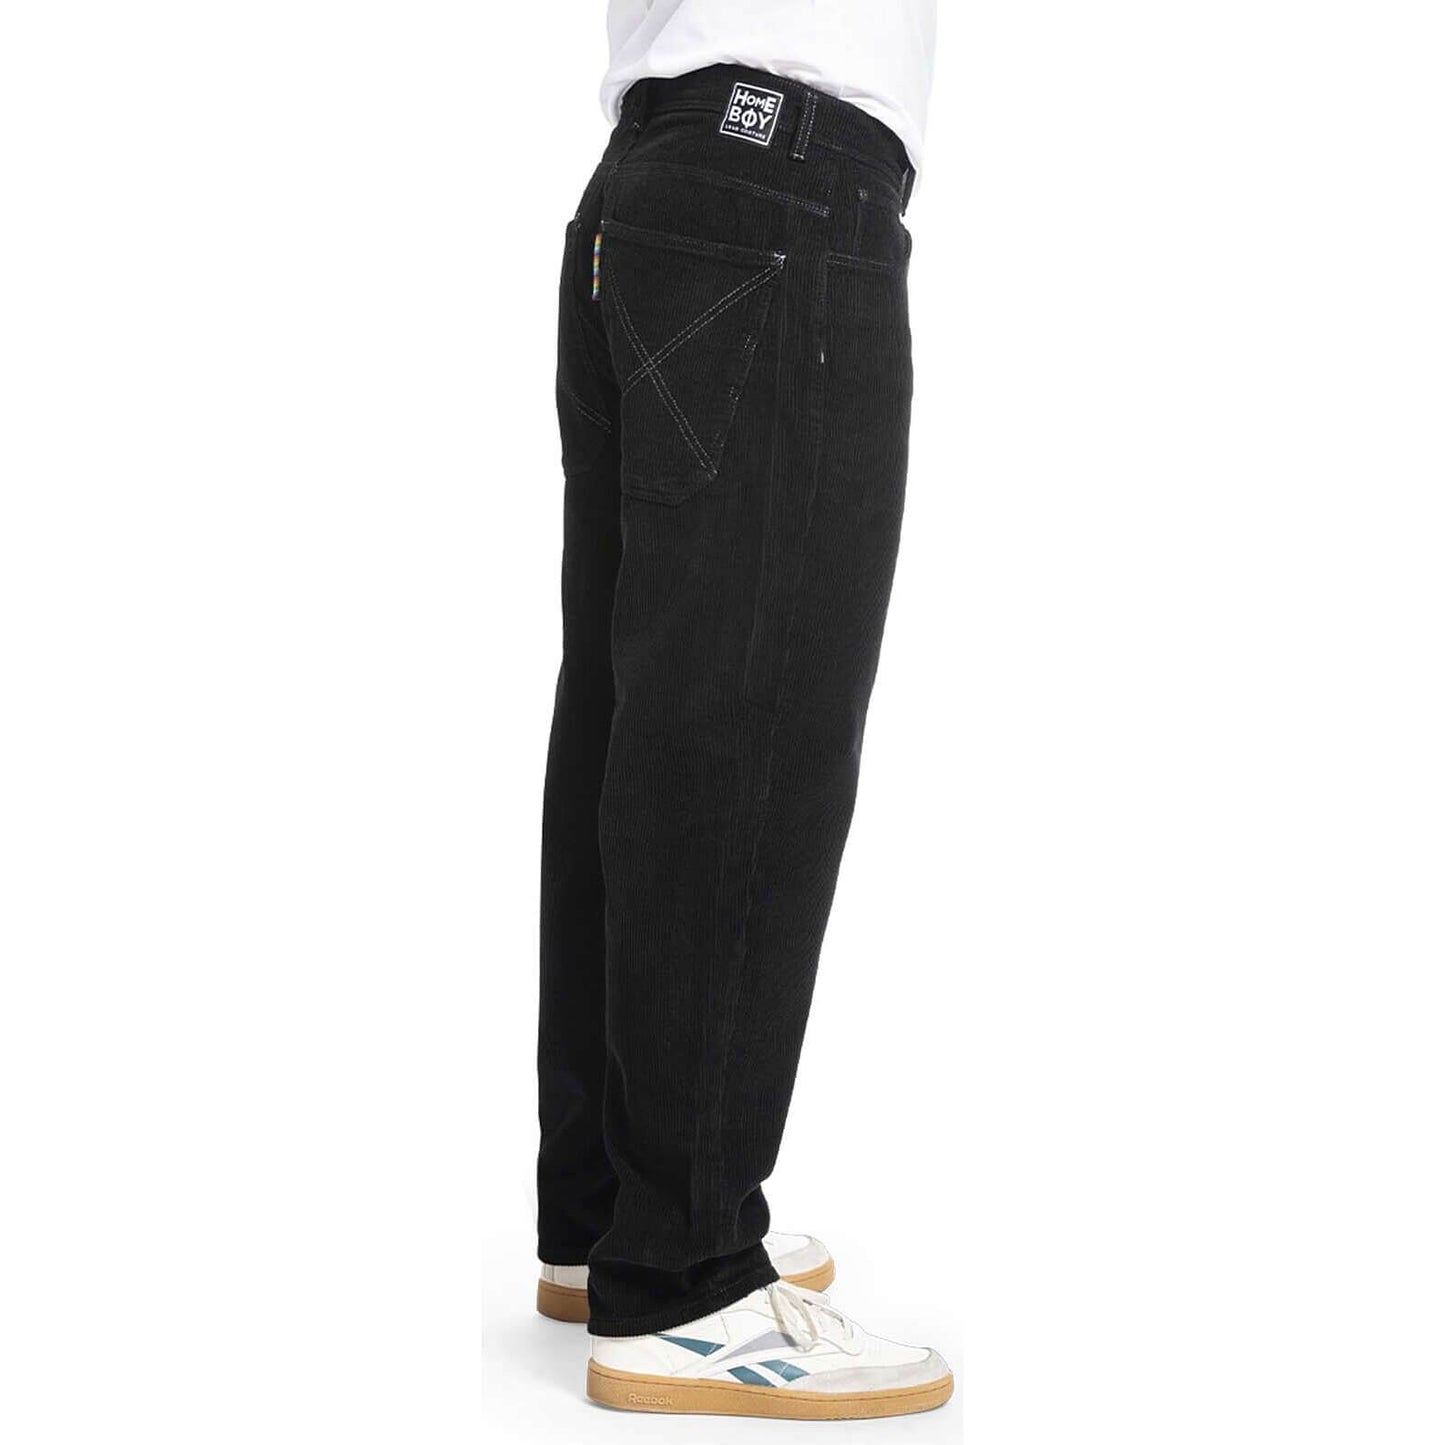 Homeboy x-tra BAGGY Cord pants BLACK